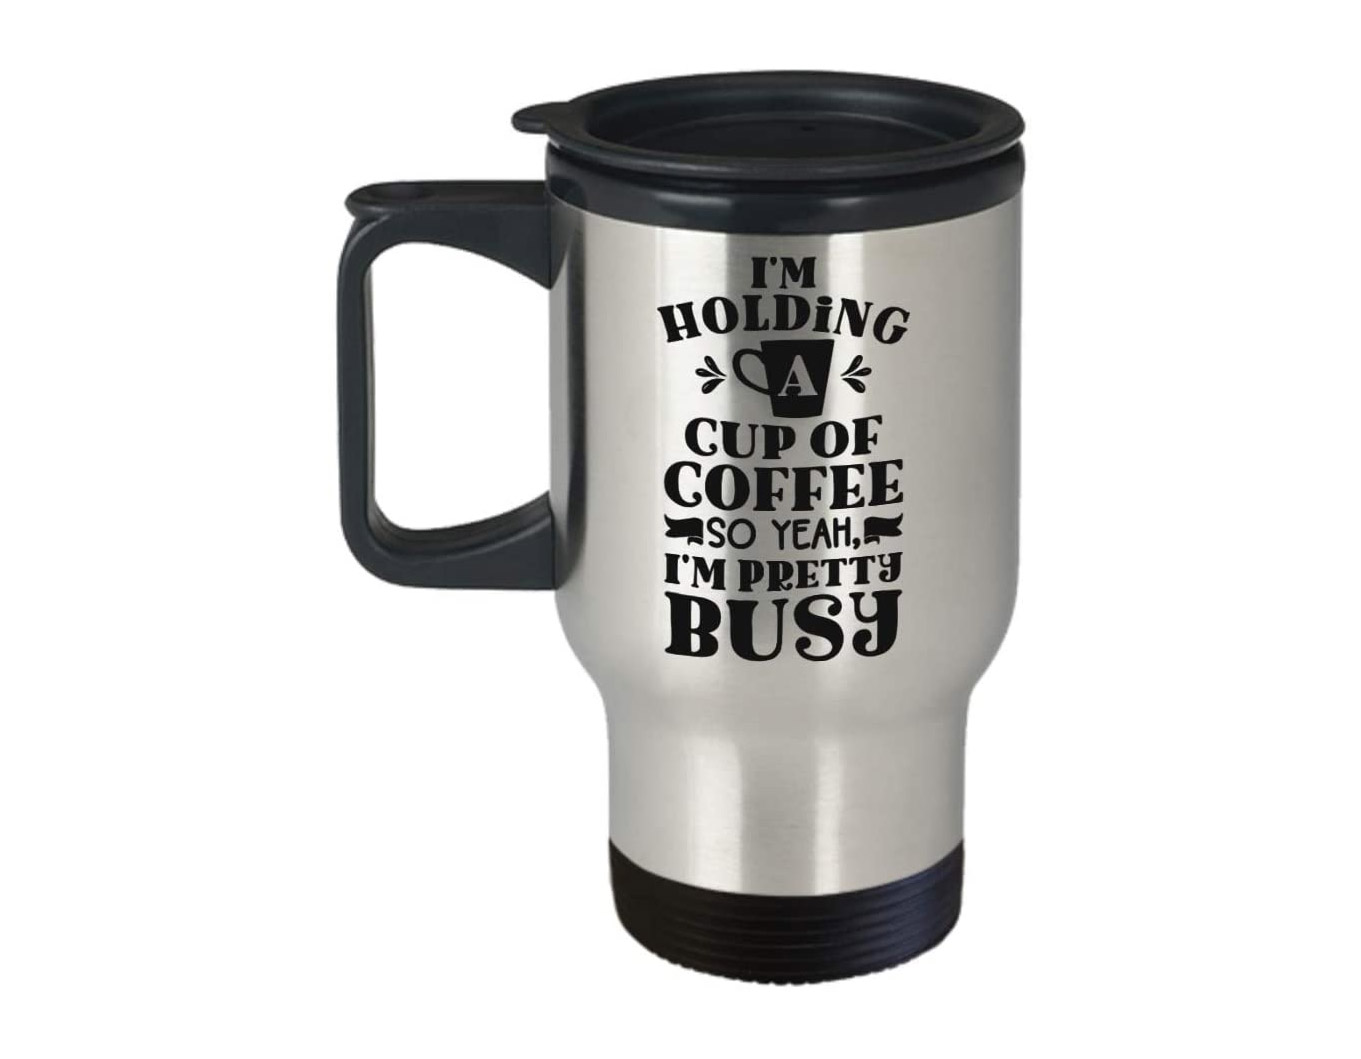 Im Holding A Cup Of Coffee So Yeah IM Pretty Busy - Funny Coffee mug